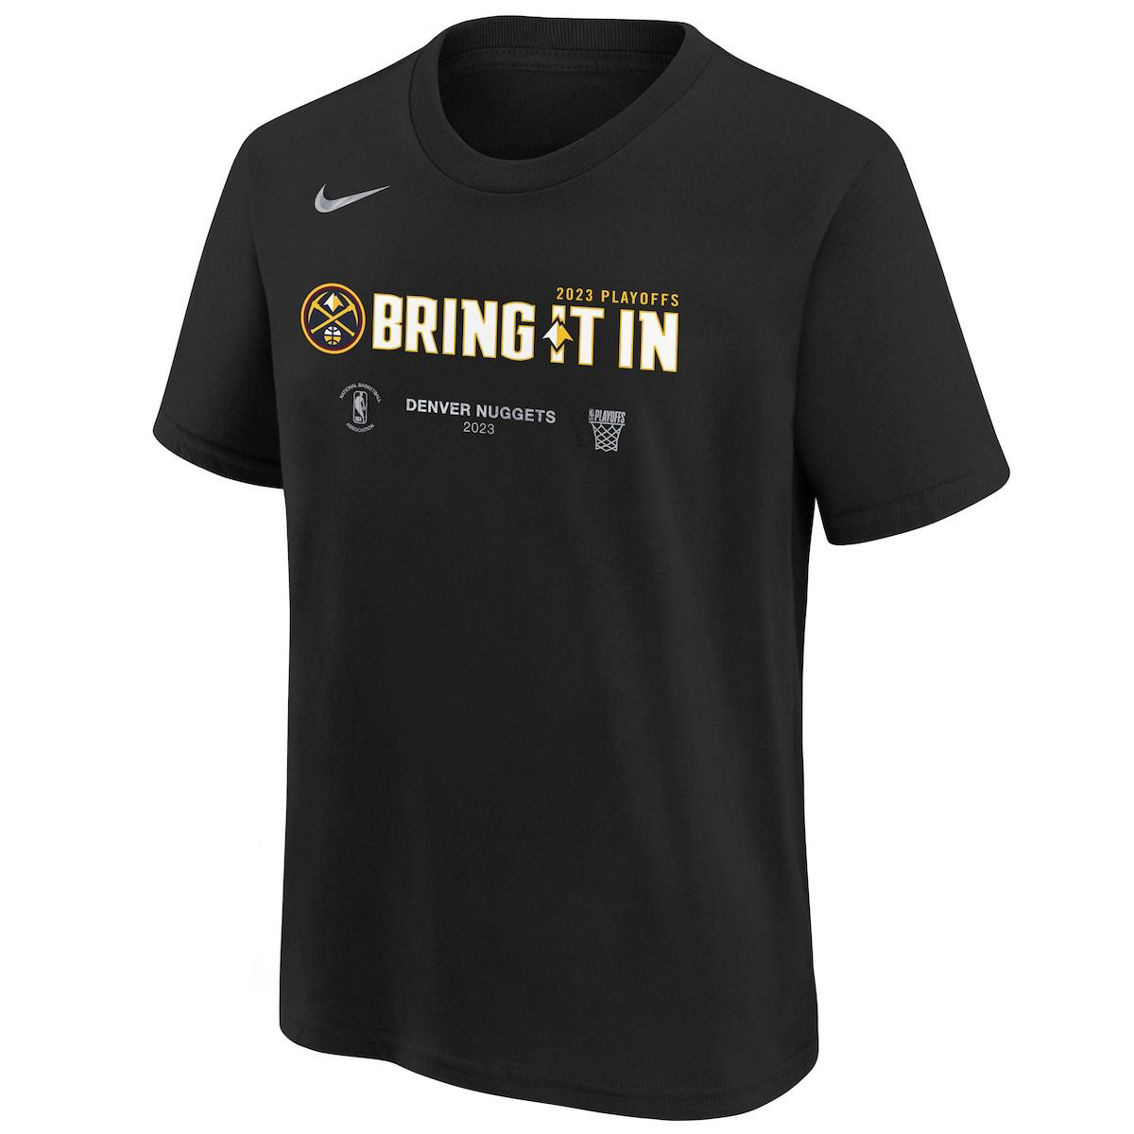 Nike Youth Black Denver Nuggets 2023 NBA Playoffs Mantra T-Shirt - Image 3 of 4